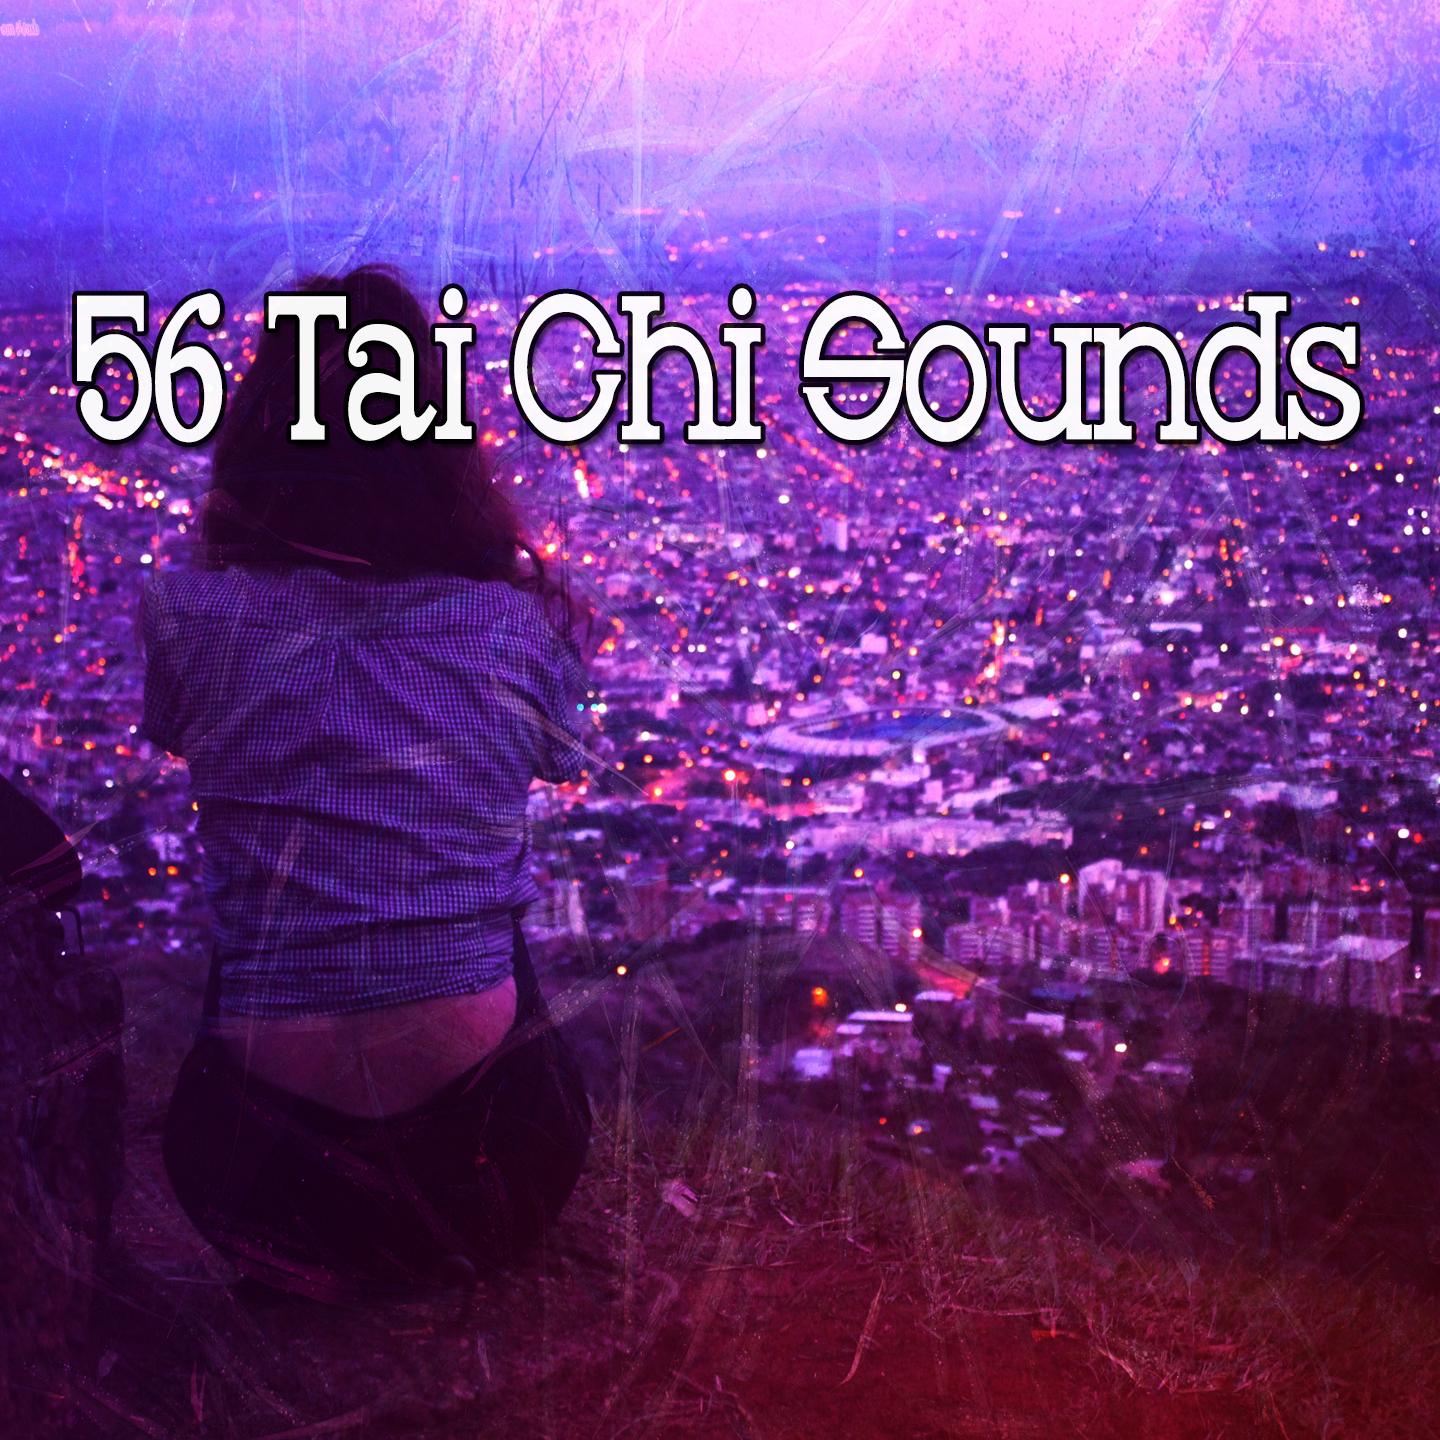 56 Tai Chi Sounds